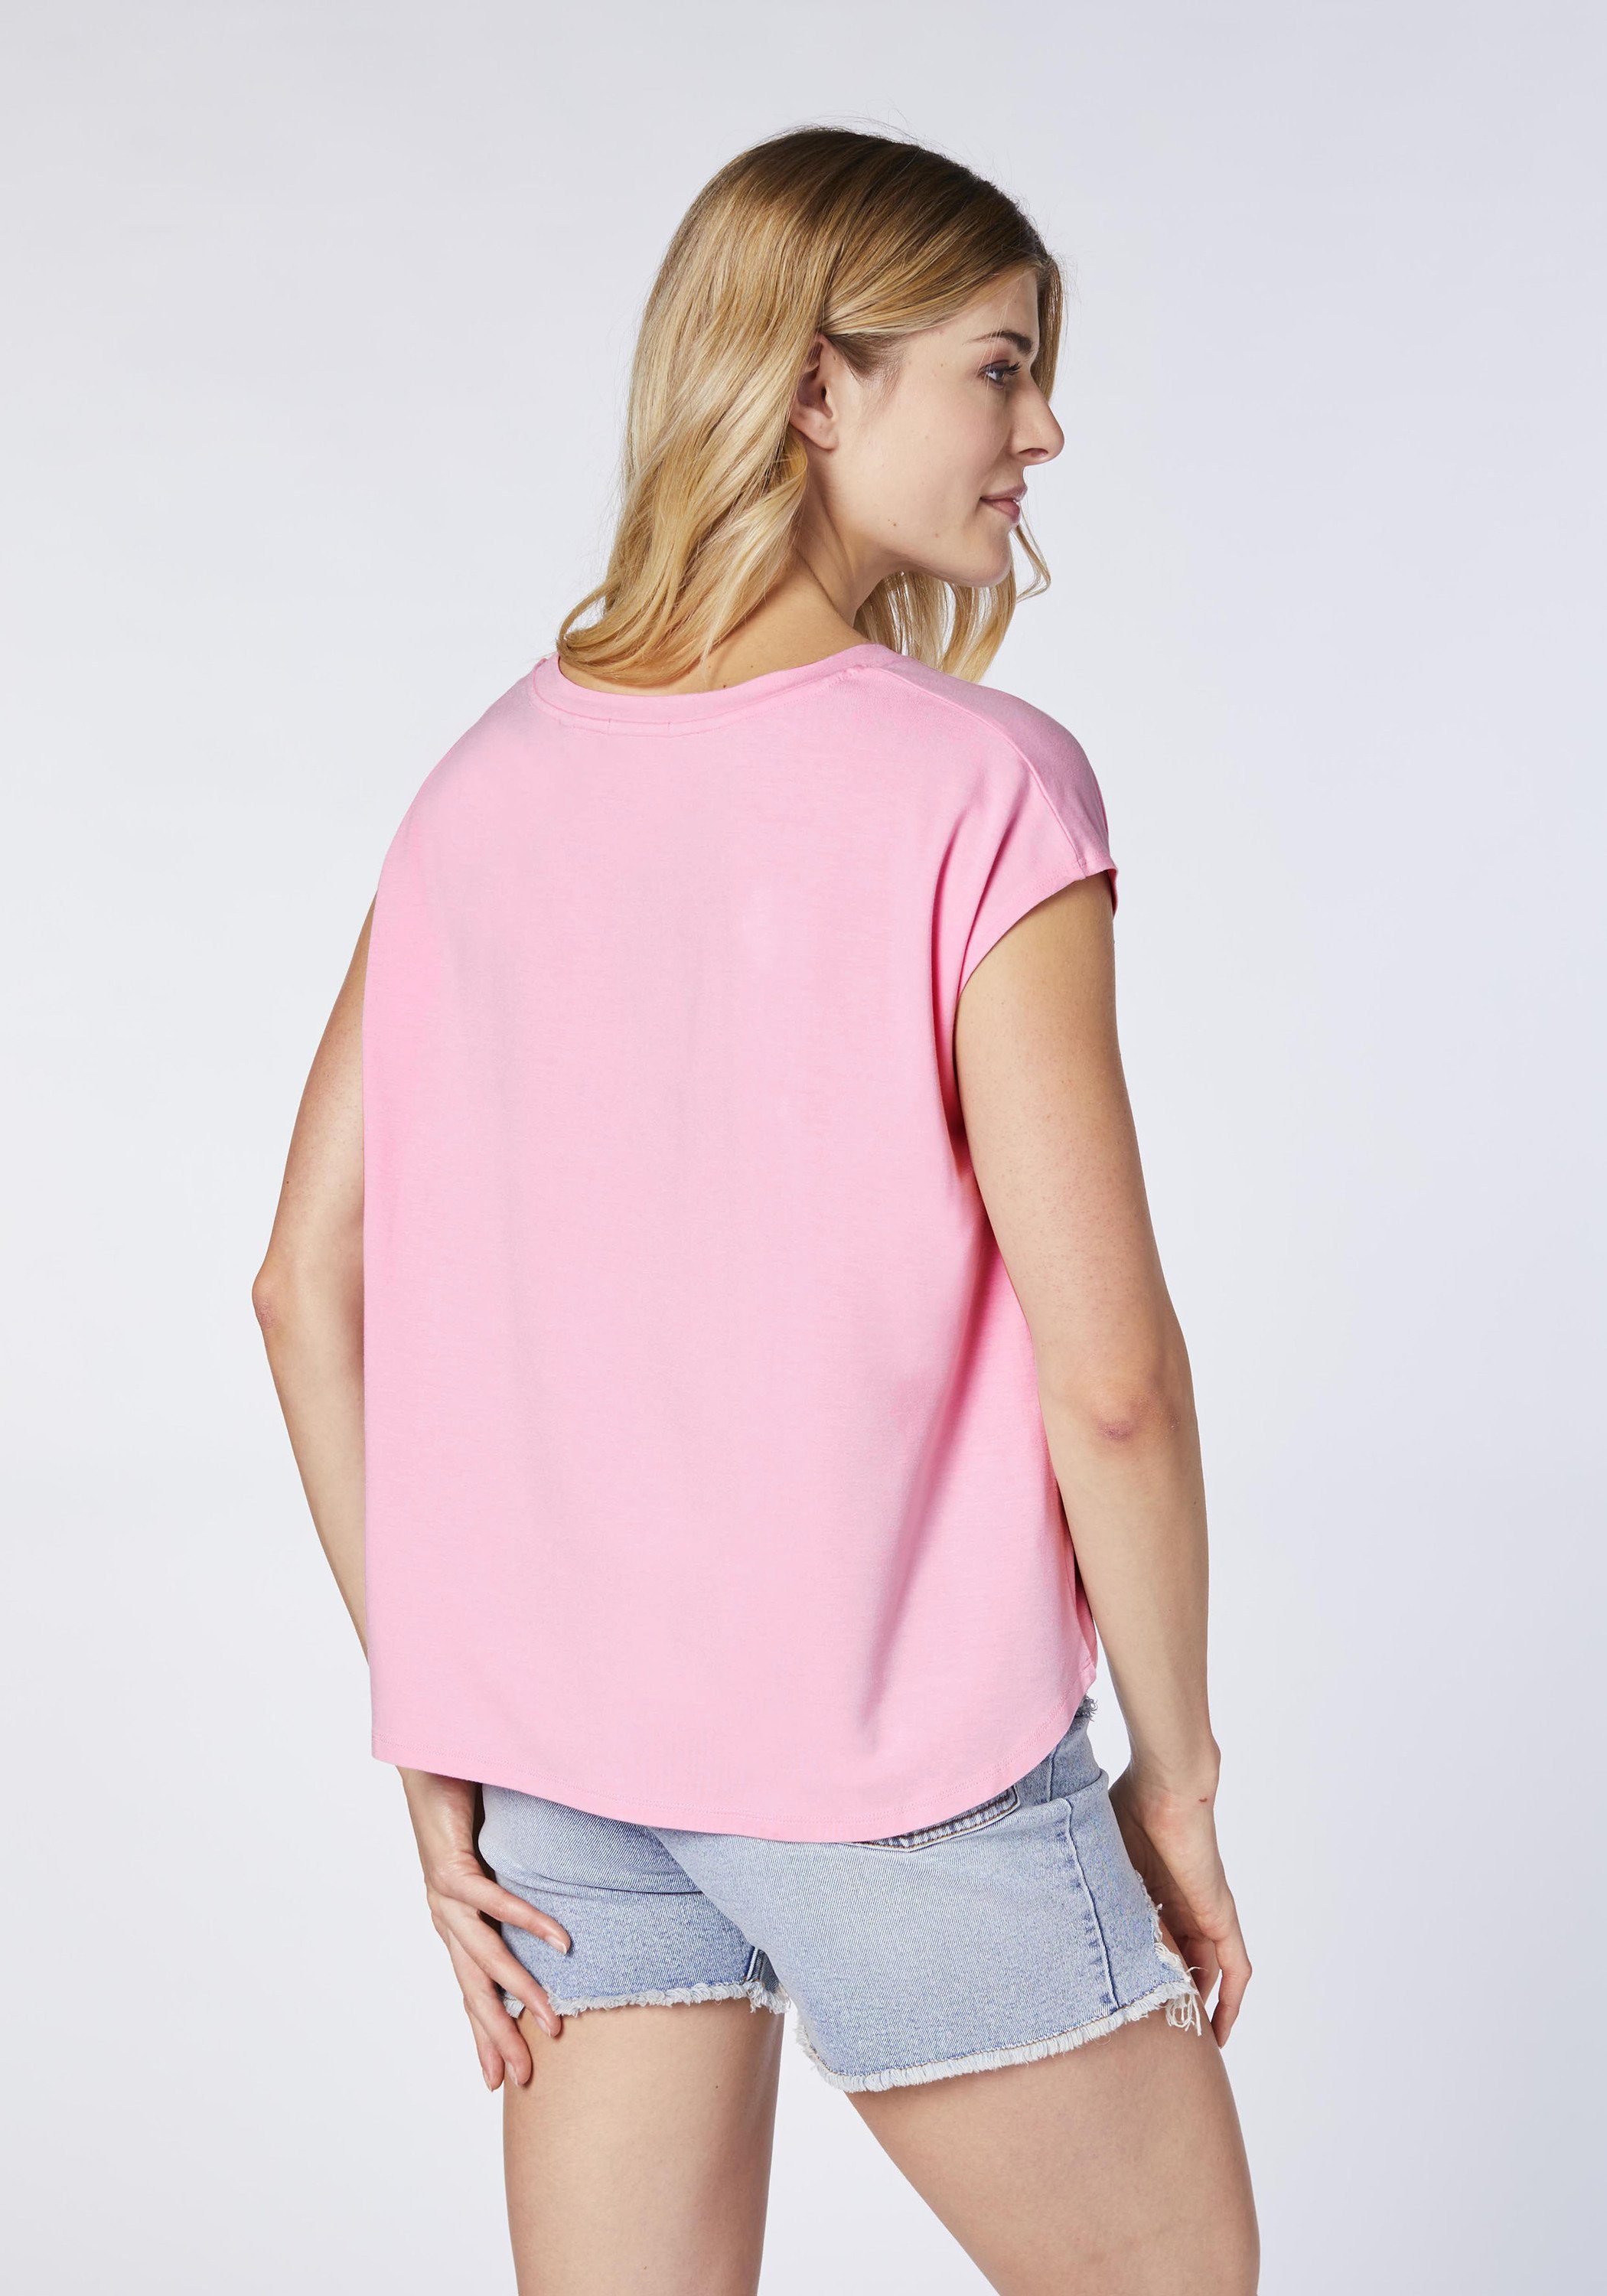 Chiemsee Print-Shirt T-Shirt mit Viskose-Elasthanmix aus Prism Pink Labelprint 1